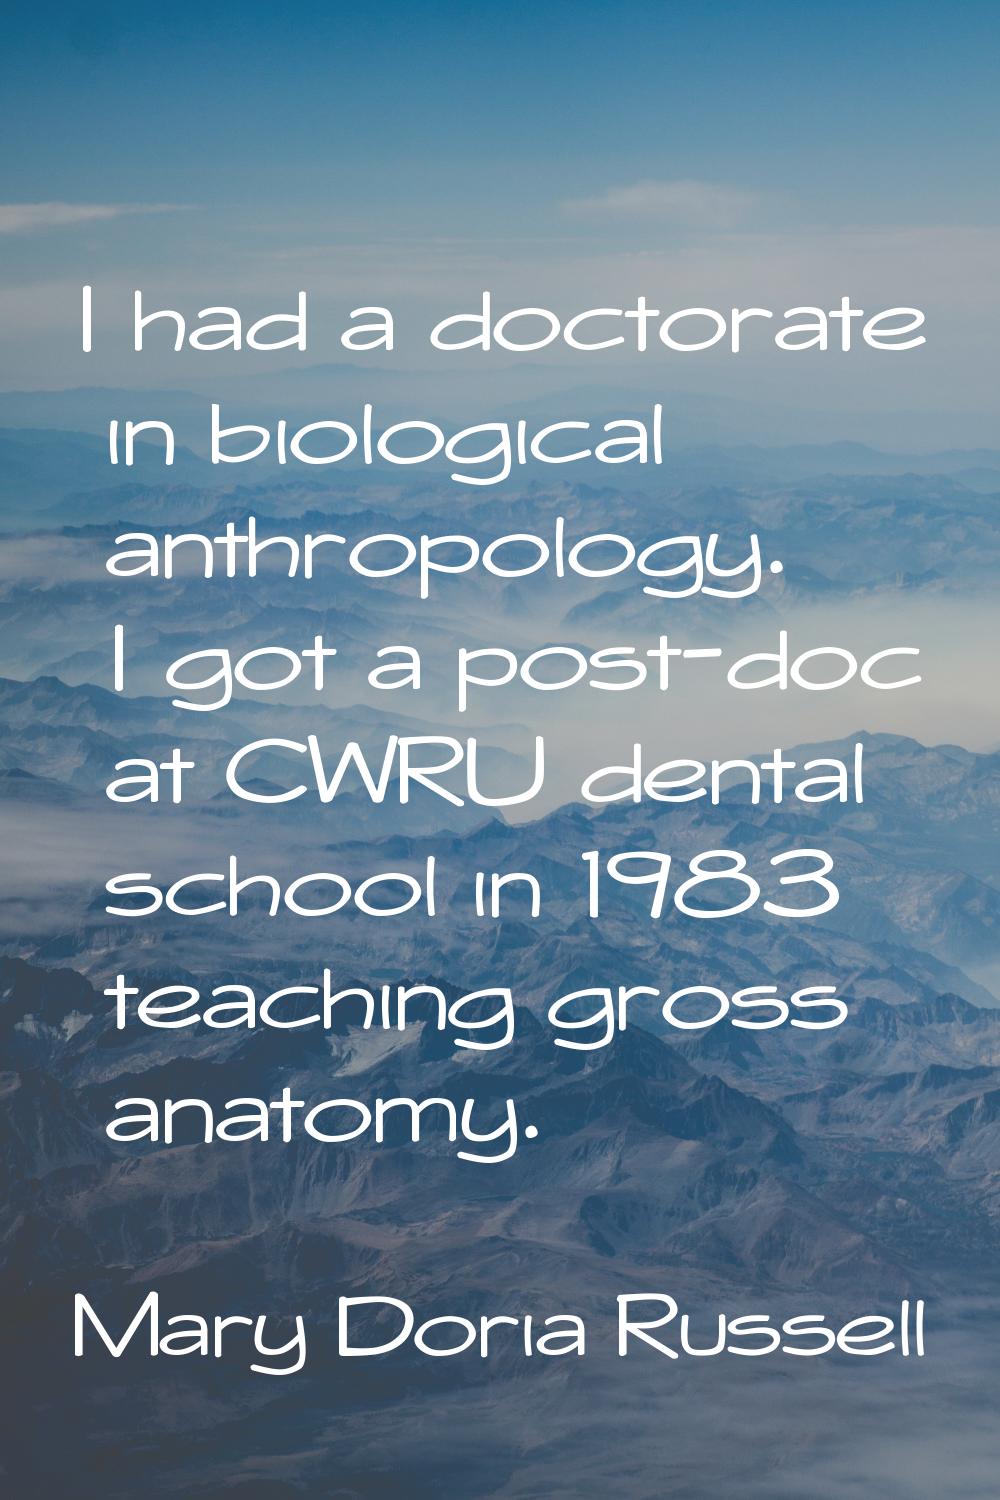 I had a doctorate in biological anthropology. I got a post-doc at CWRU dental school in 1983 teachi